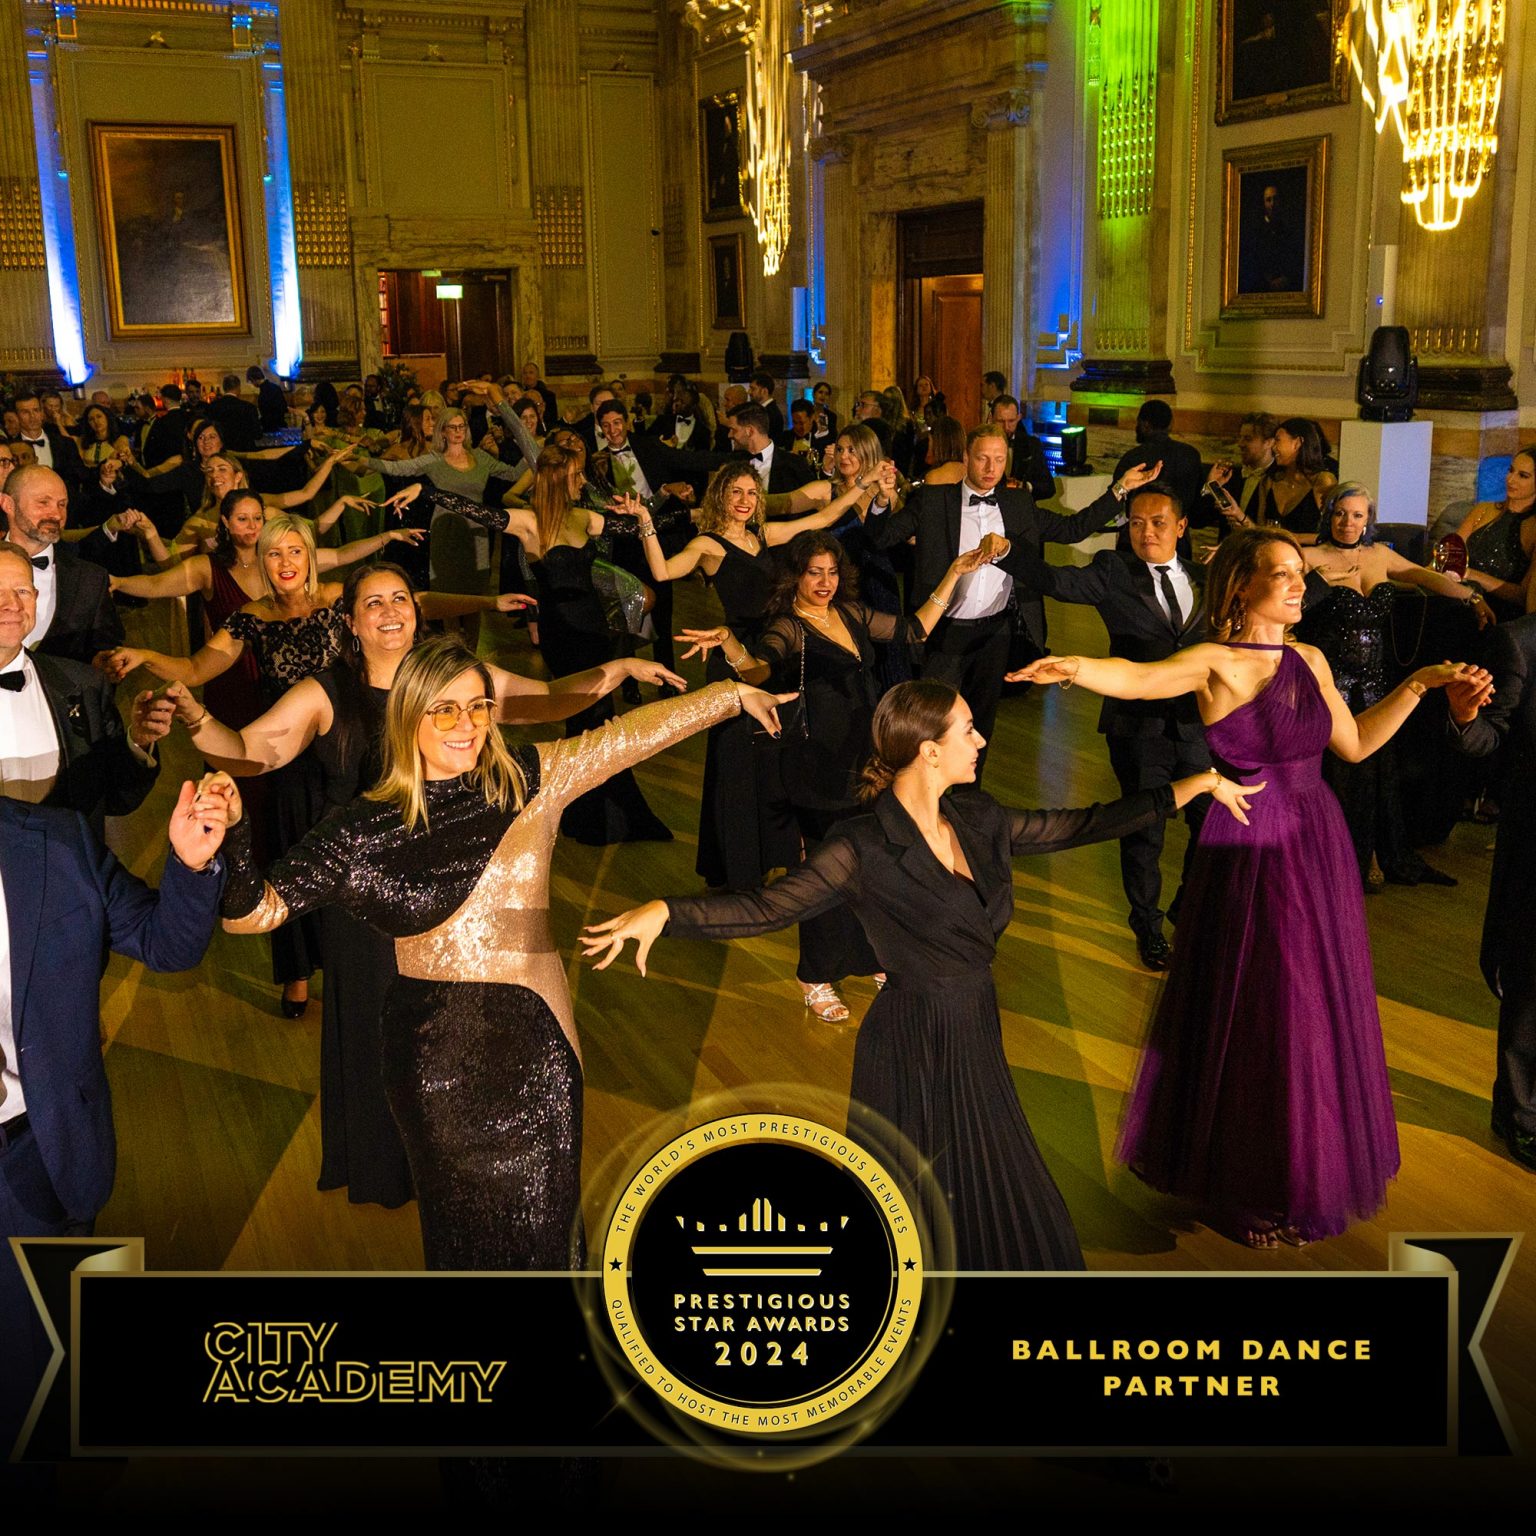 Ballroom Dance Partner 2024   City Academy, Prestigious Star Awards